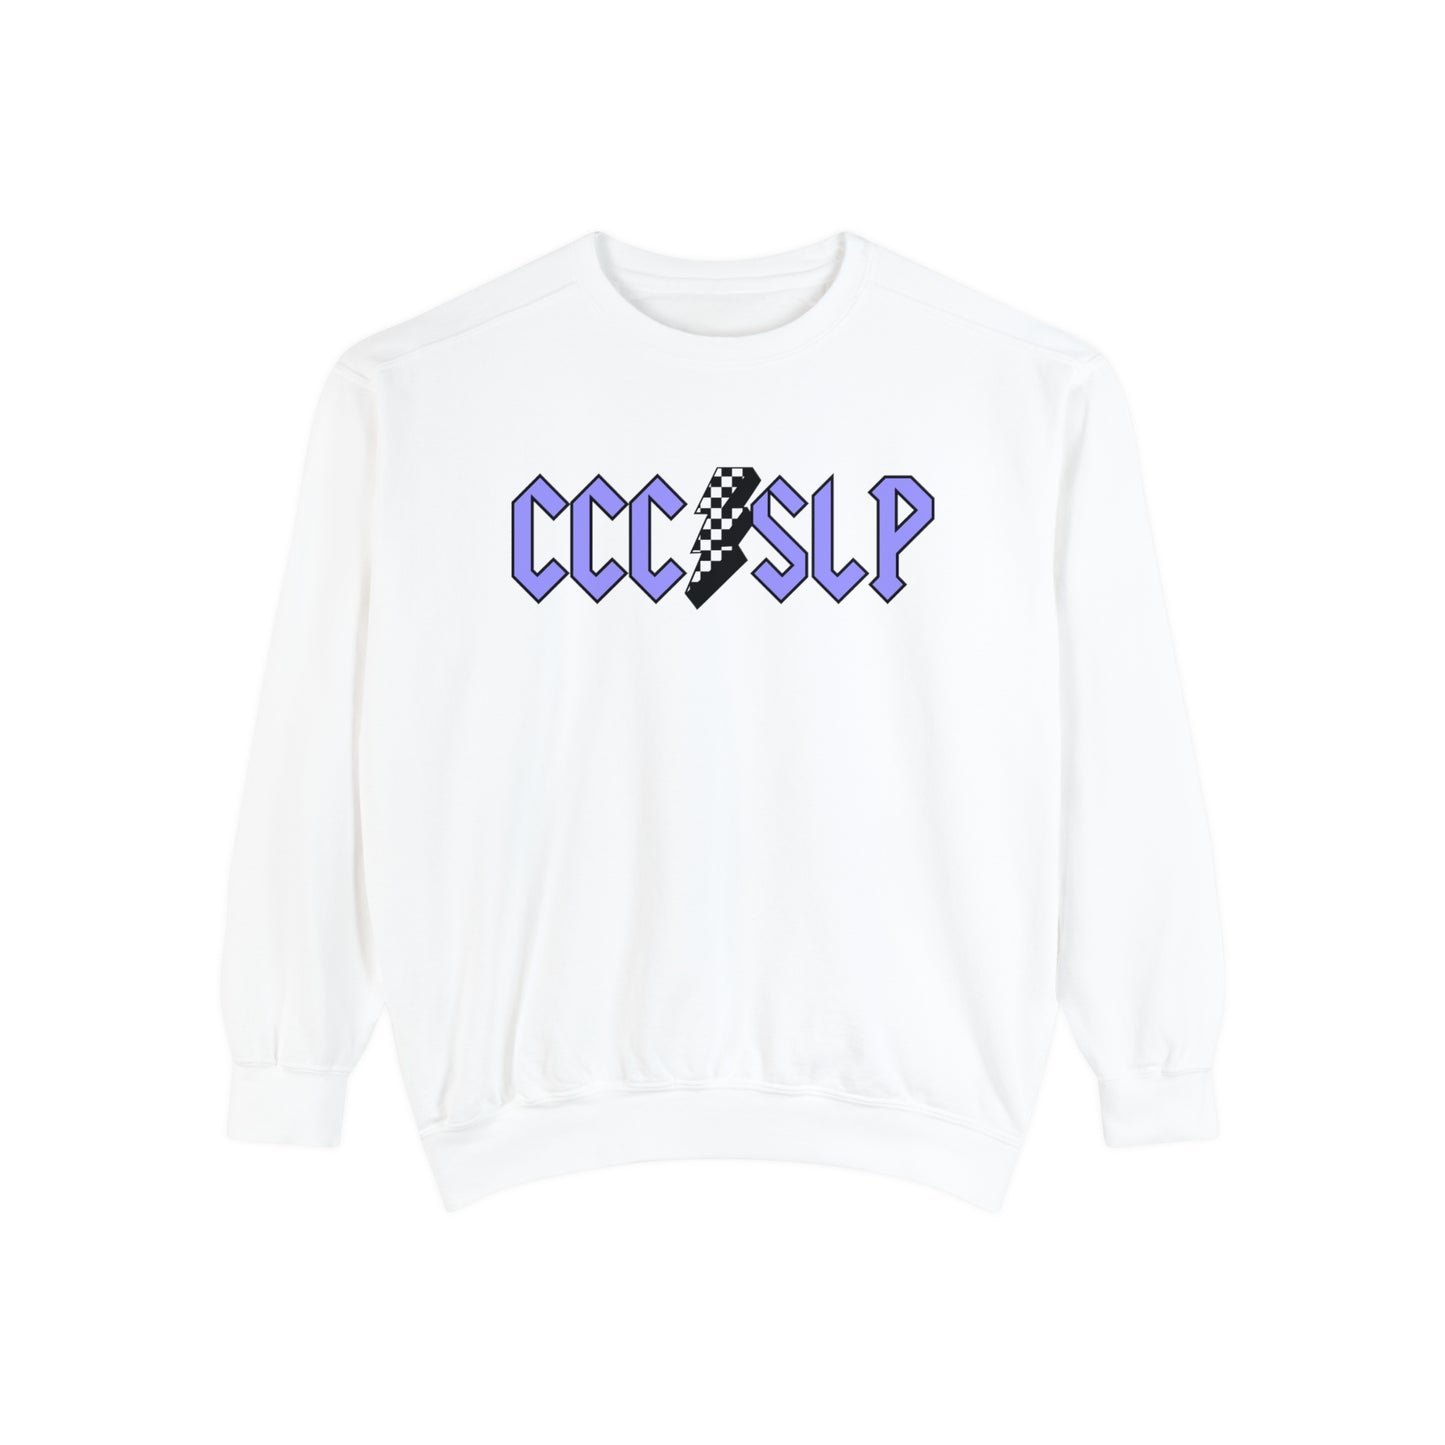 CCC SLP Band Inspired Comfort Colors Sweatshirt